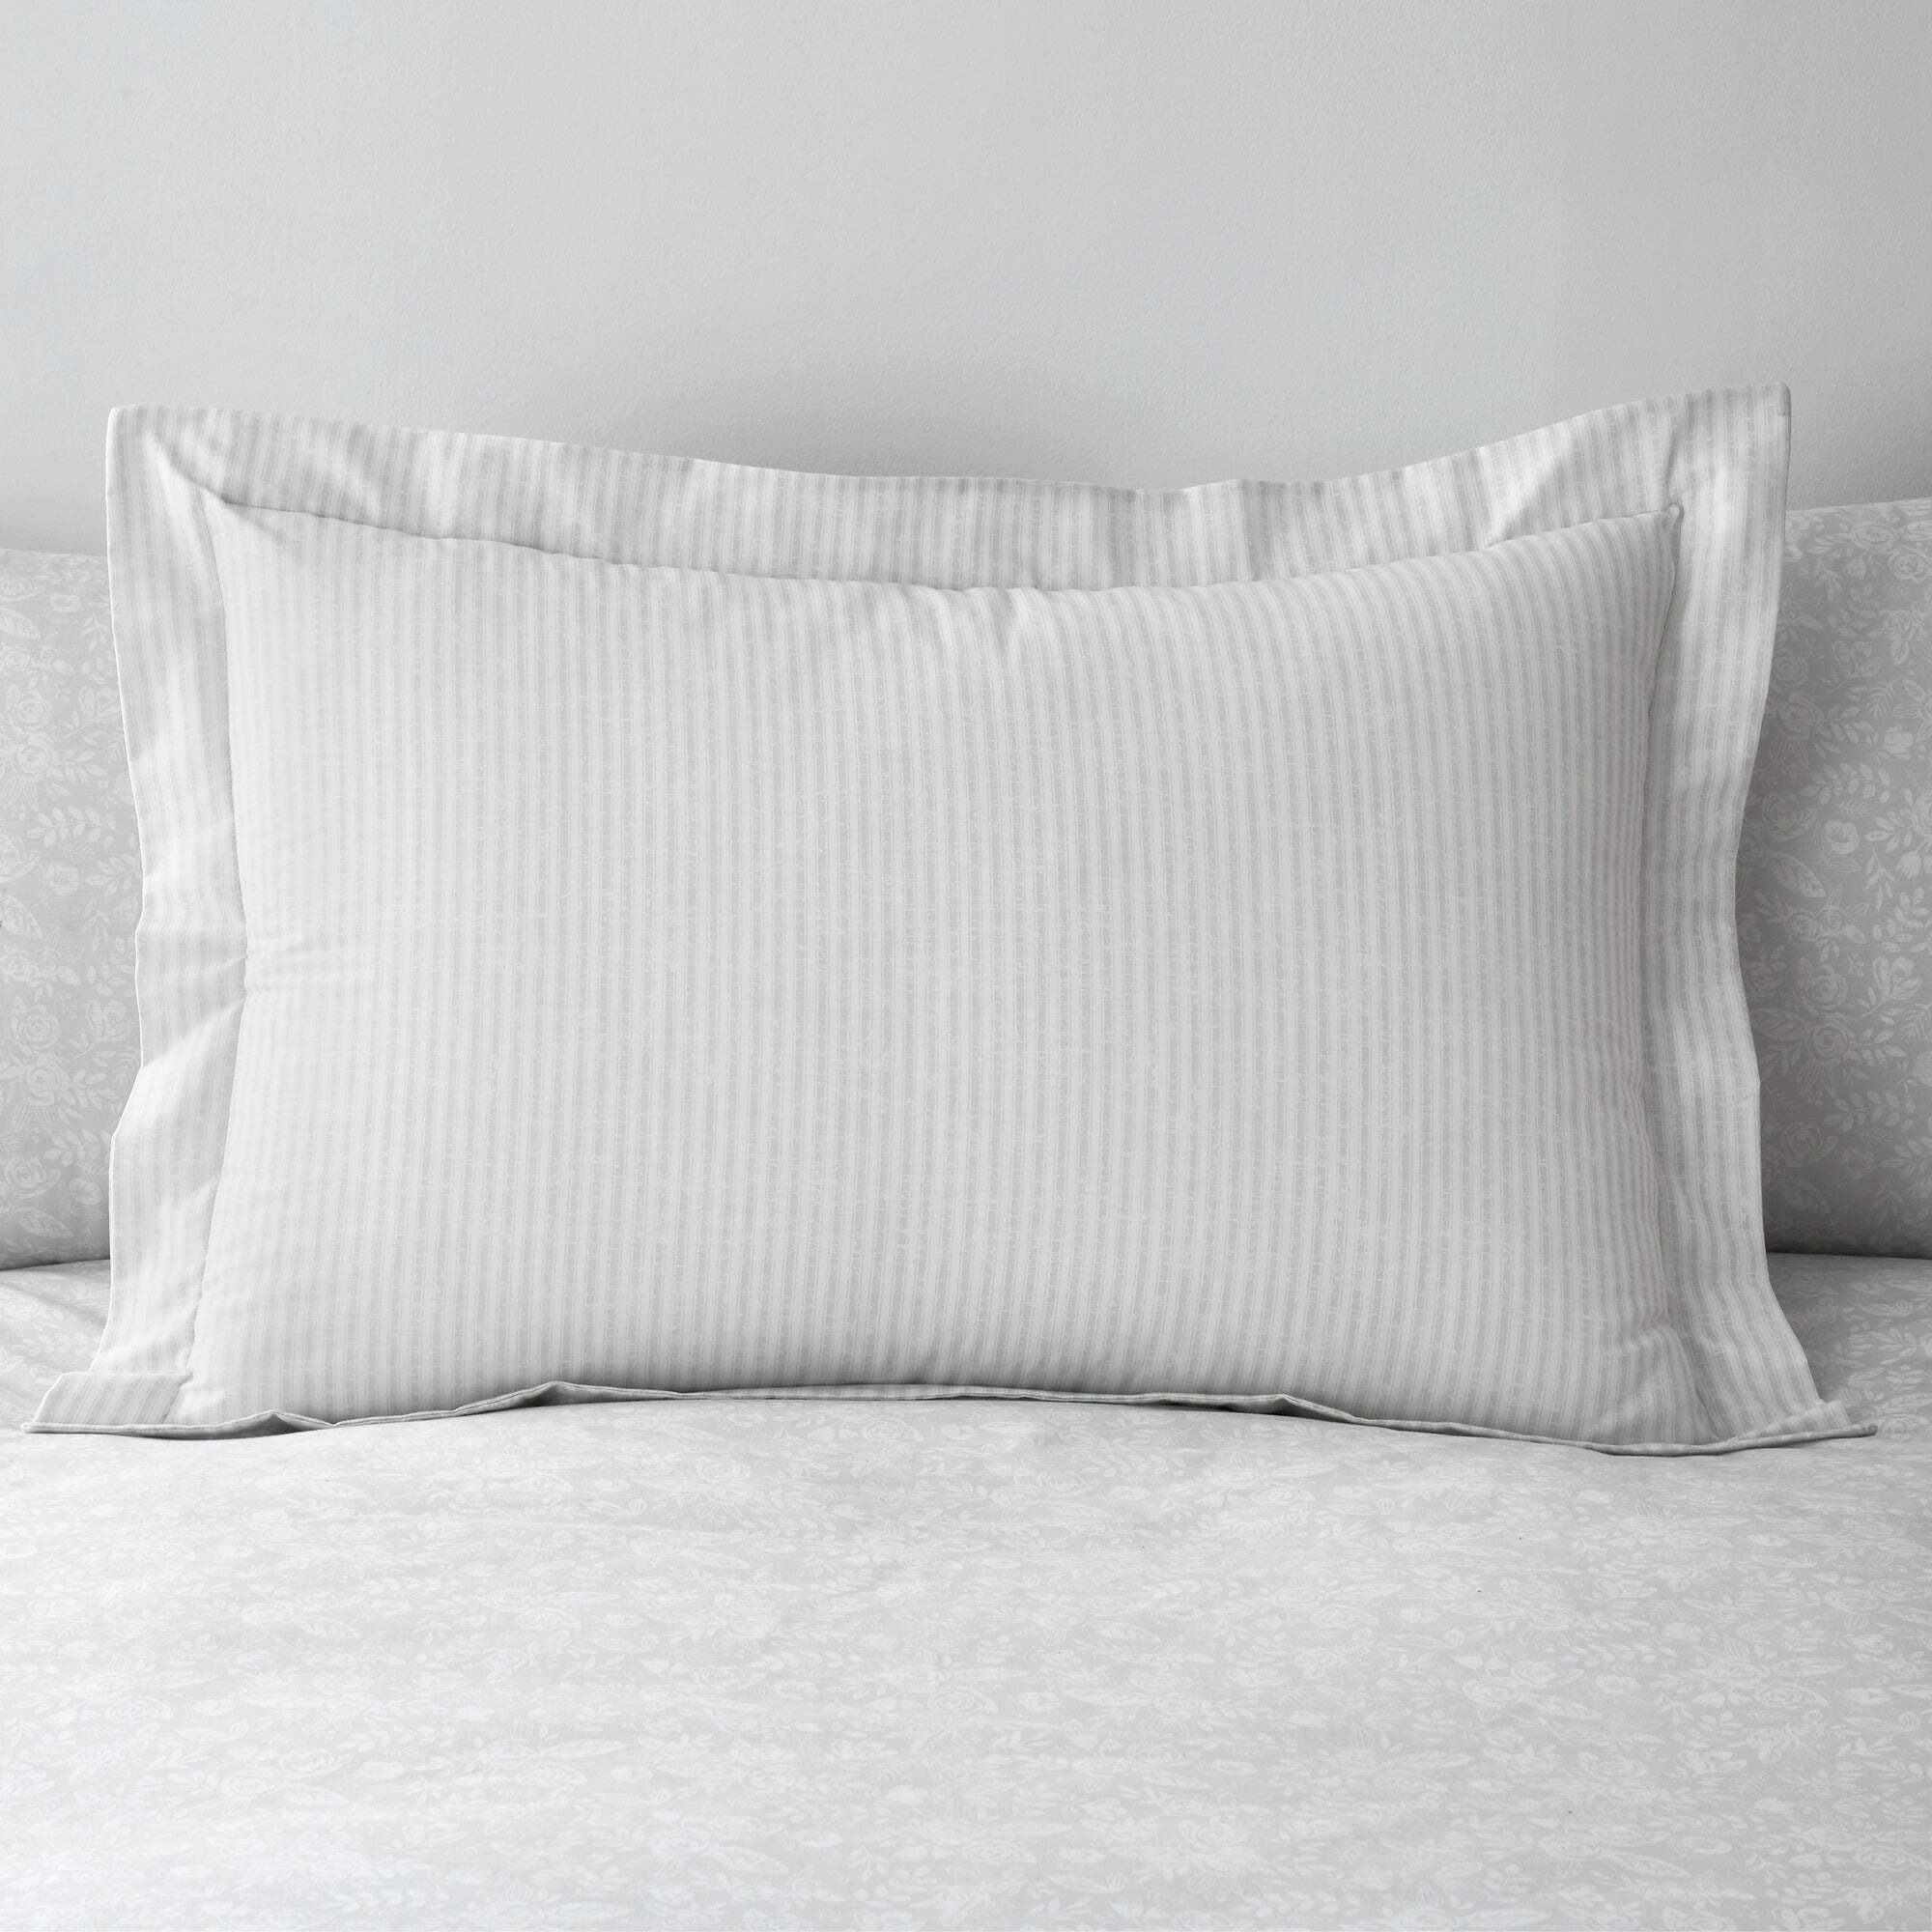 Phoebe Grey Oxford Pillowcase Grey and White